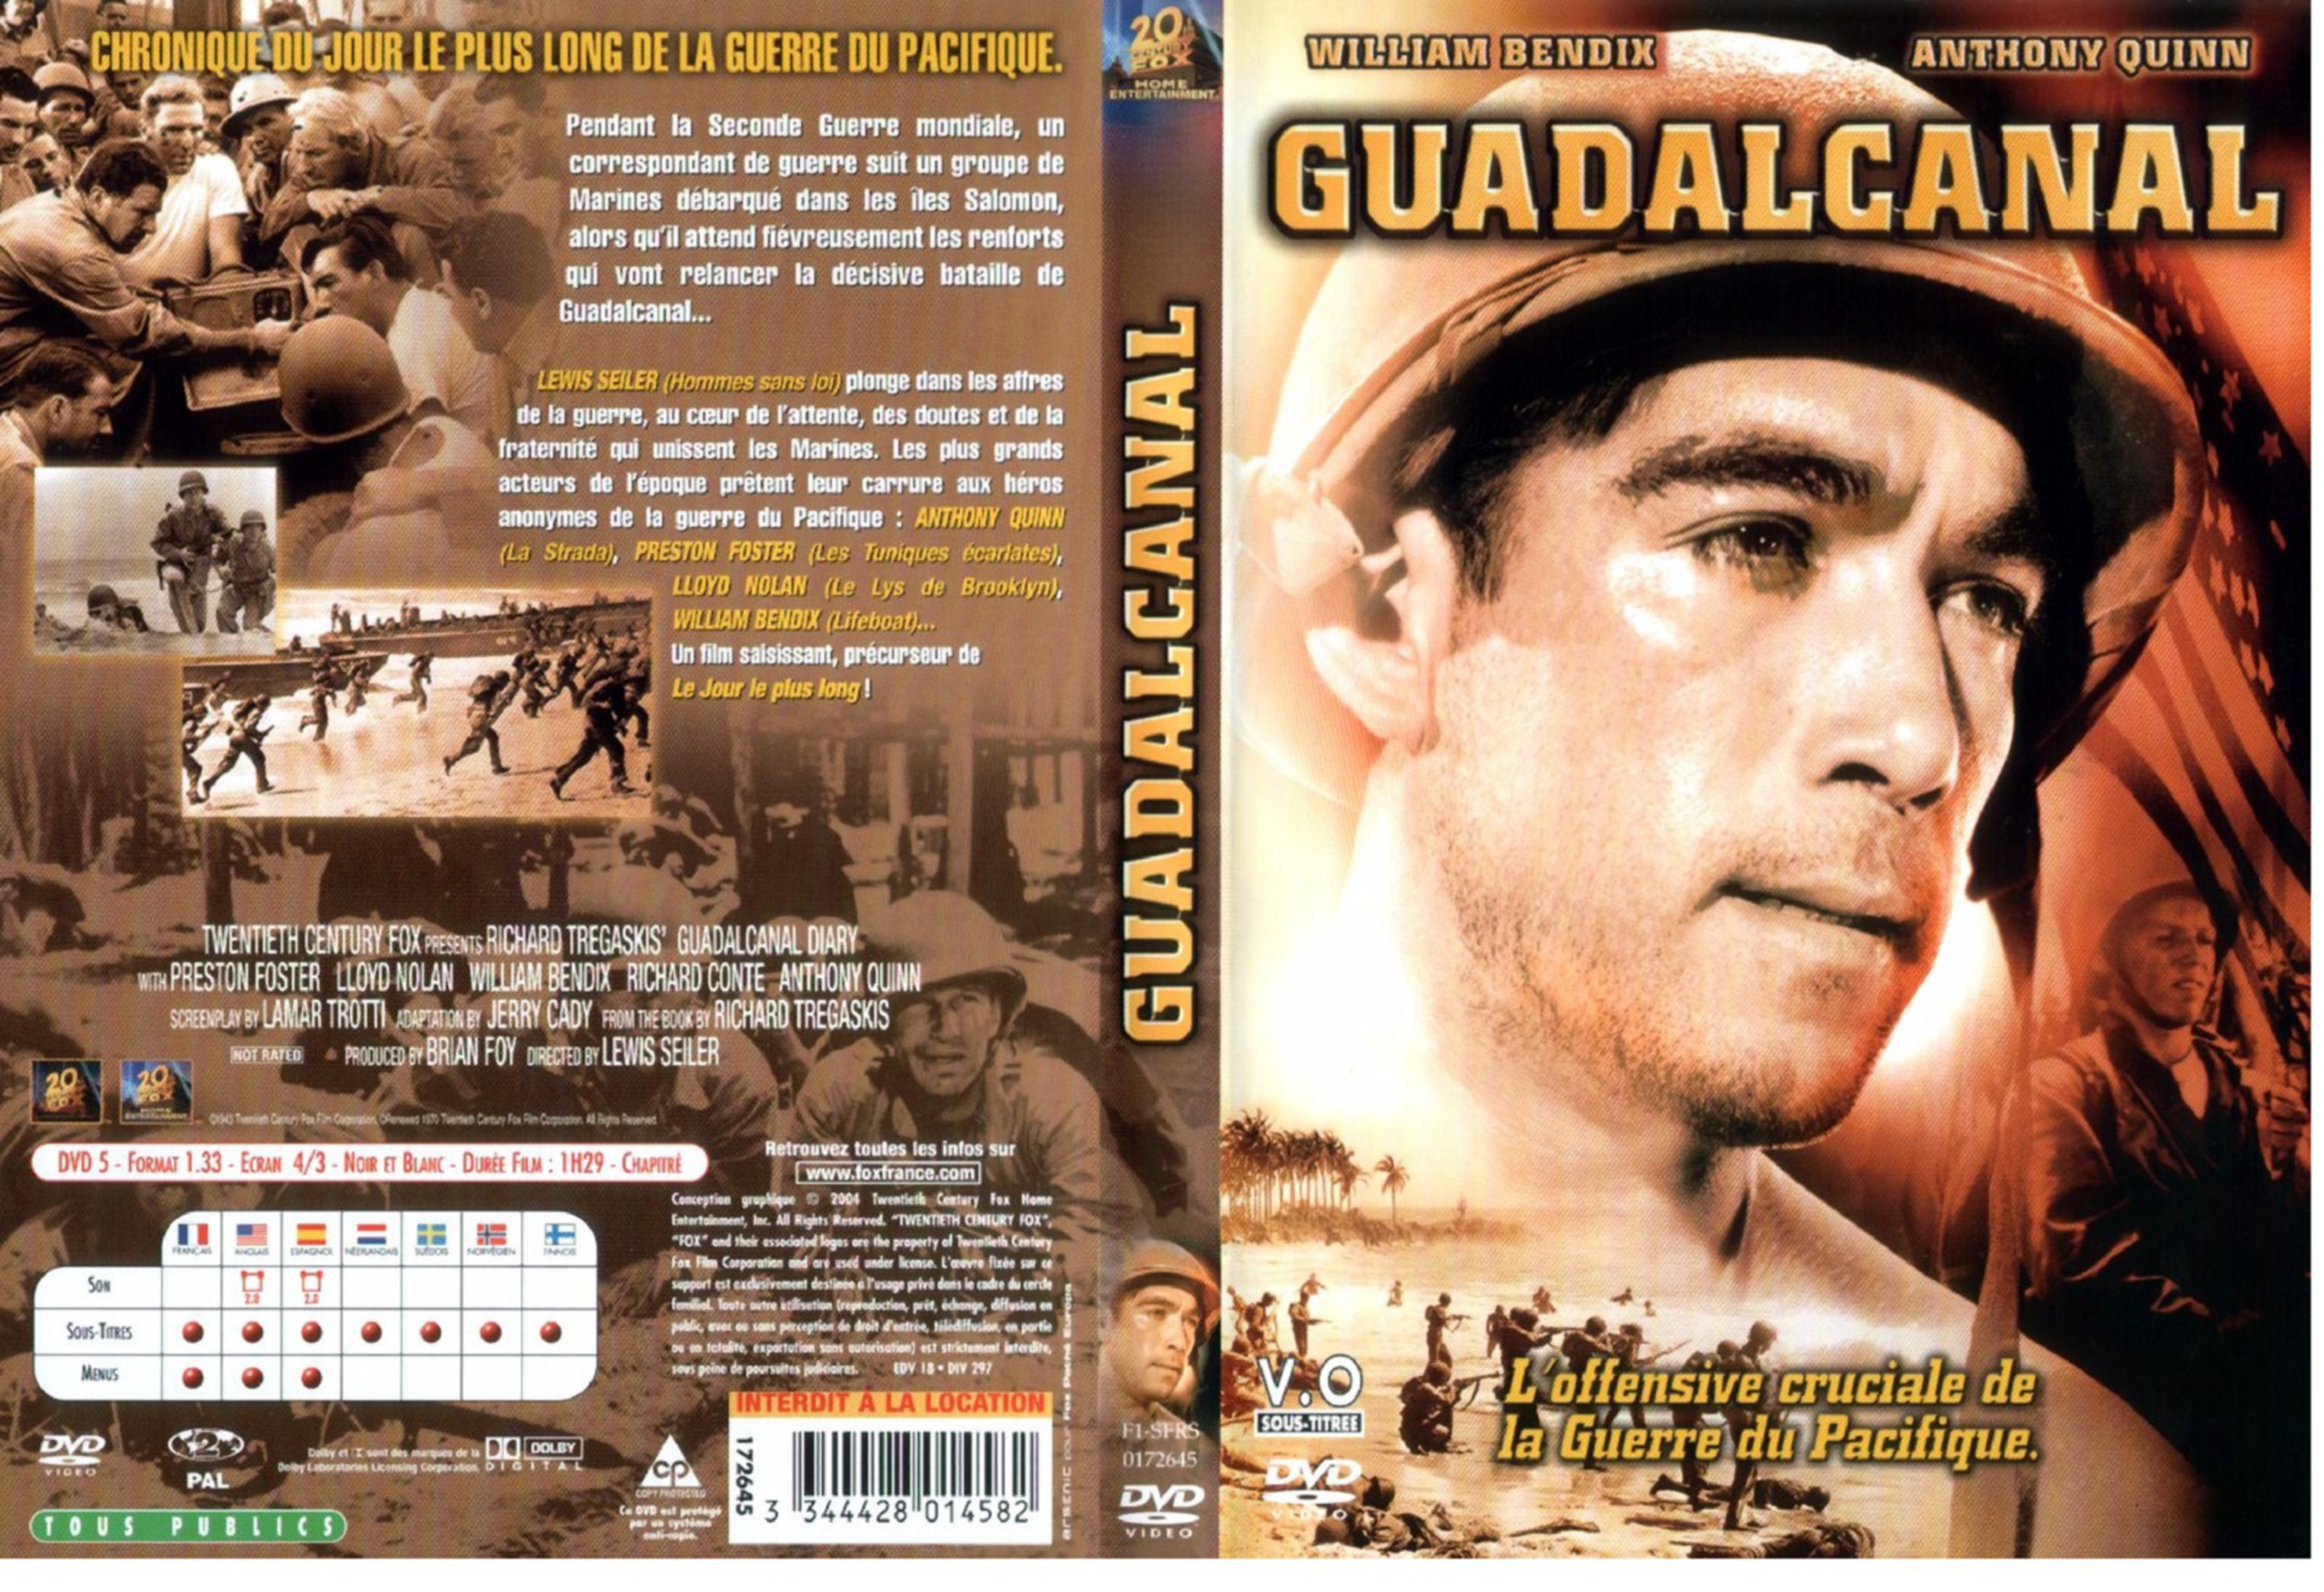 Jaquette DVD Guadalcanal v2